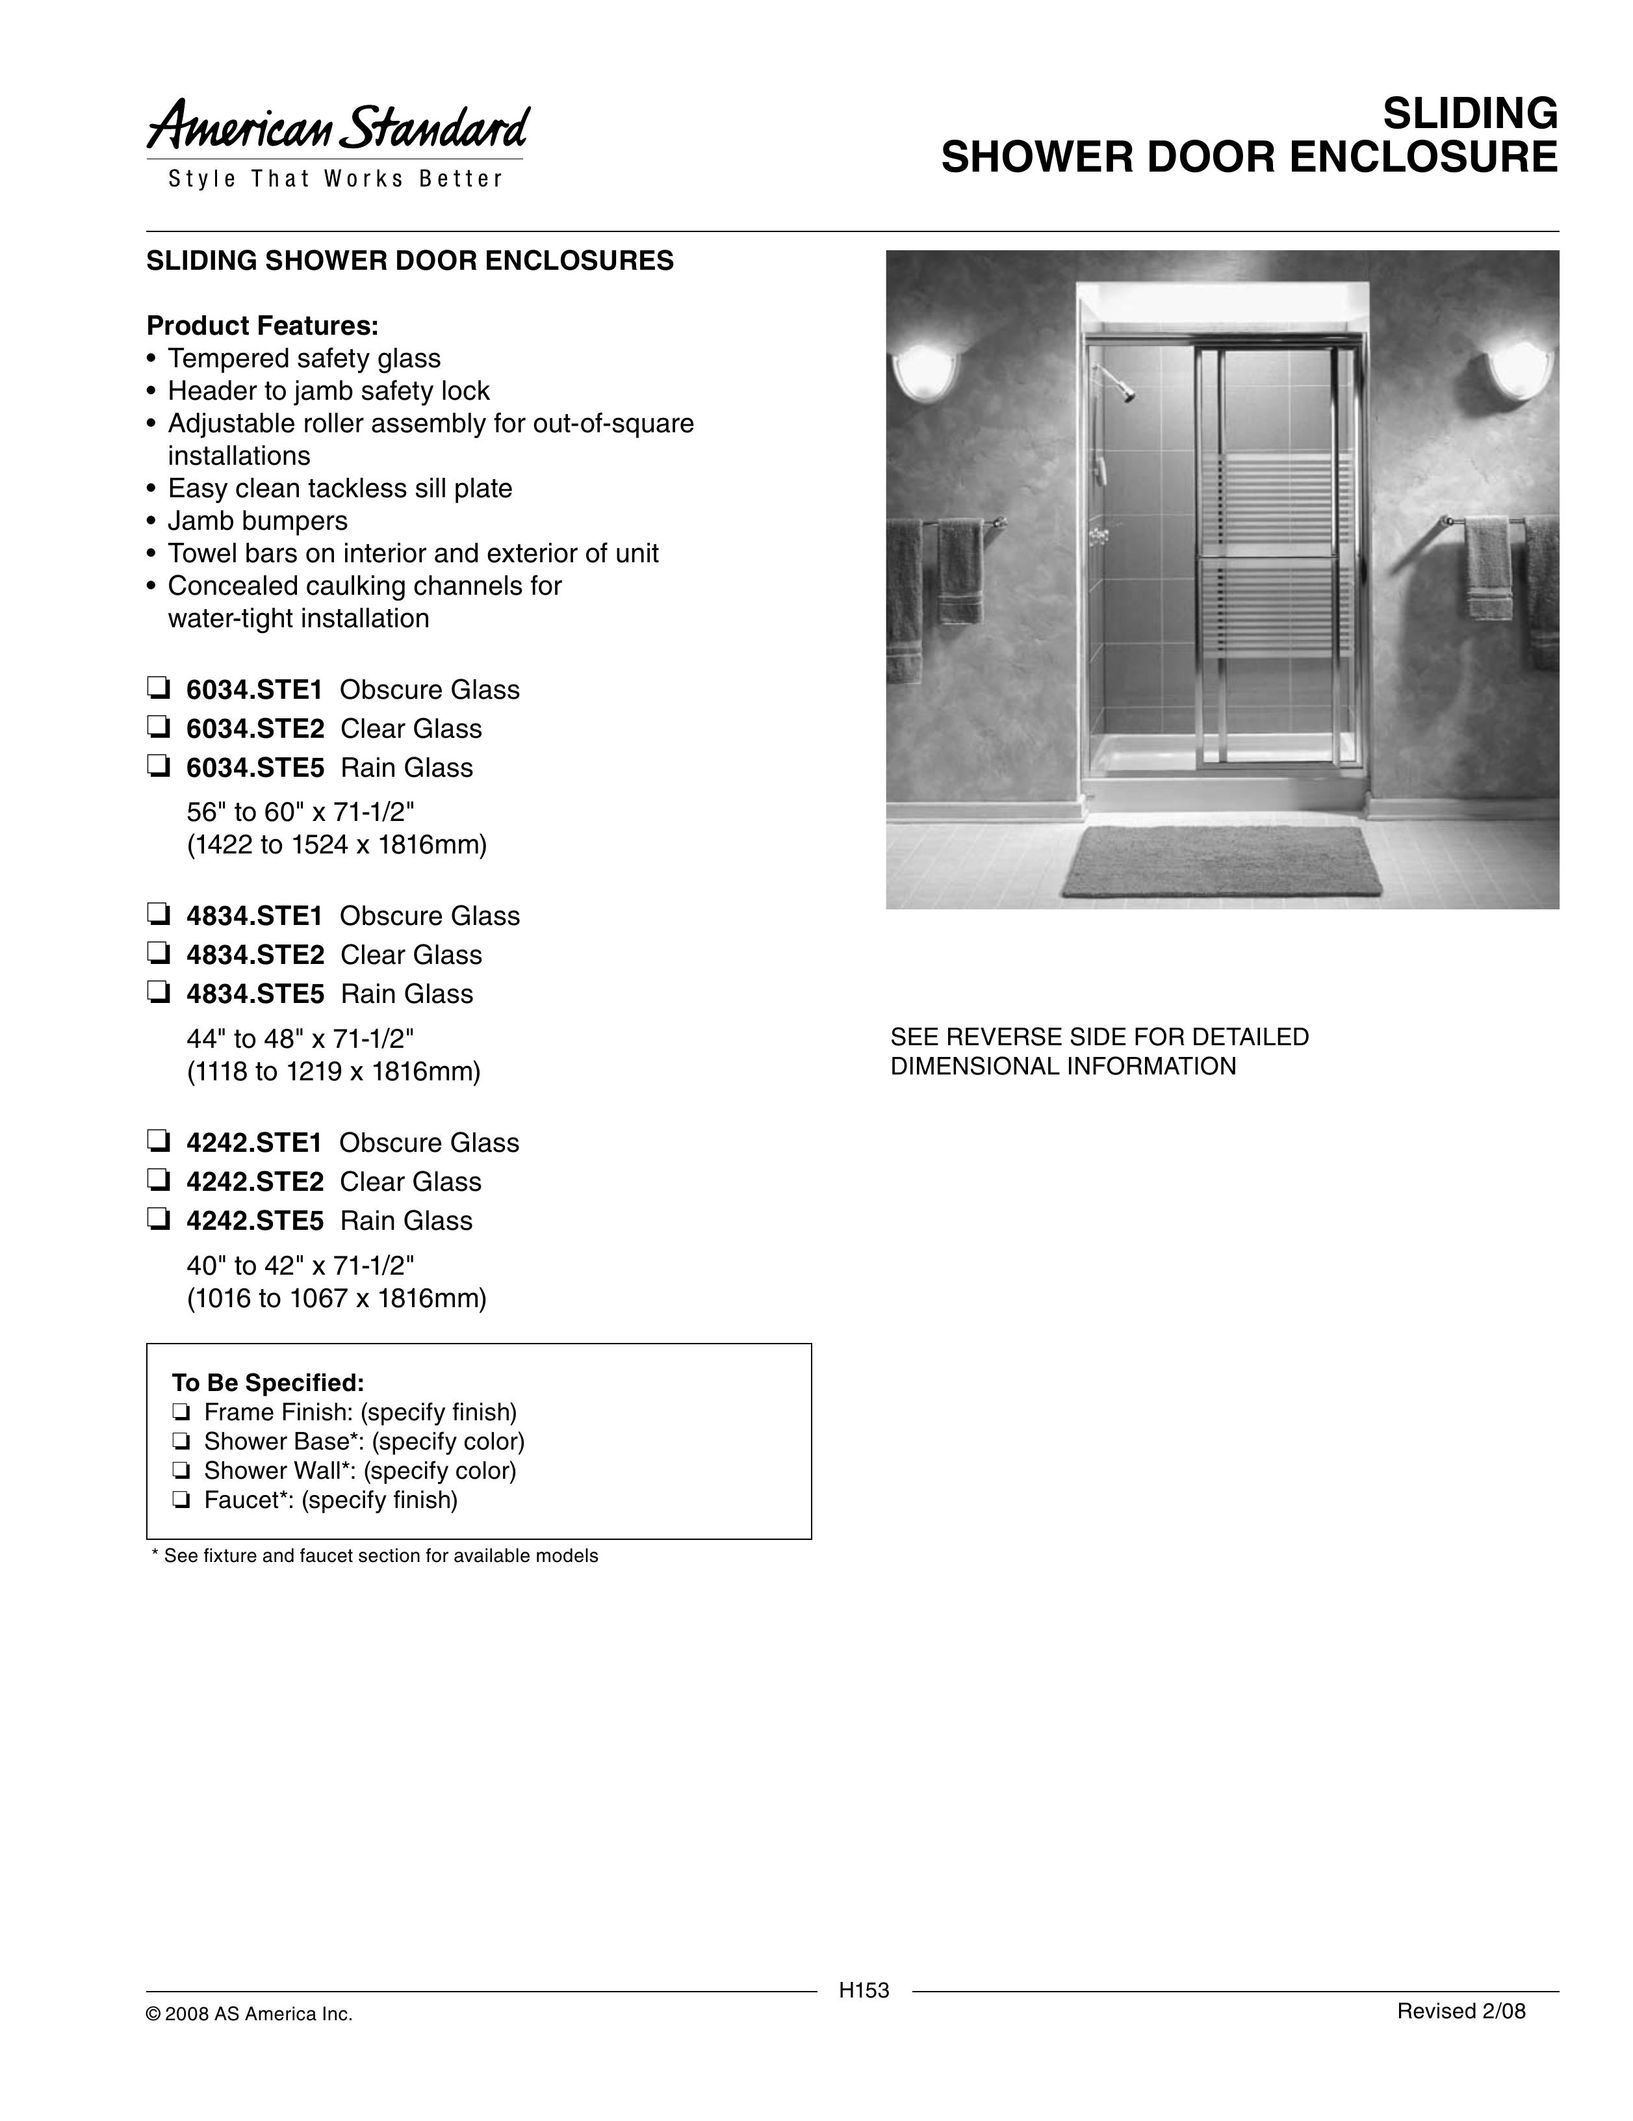 American Standard 4242.STE5 Door User Manual